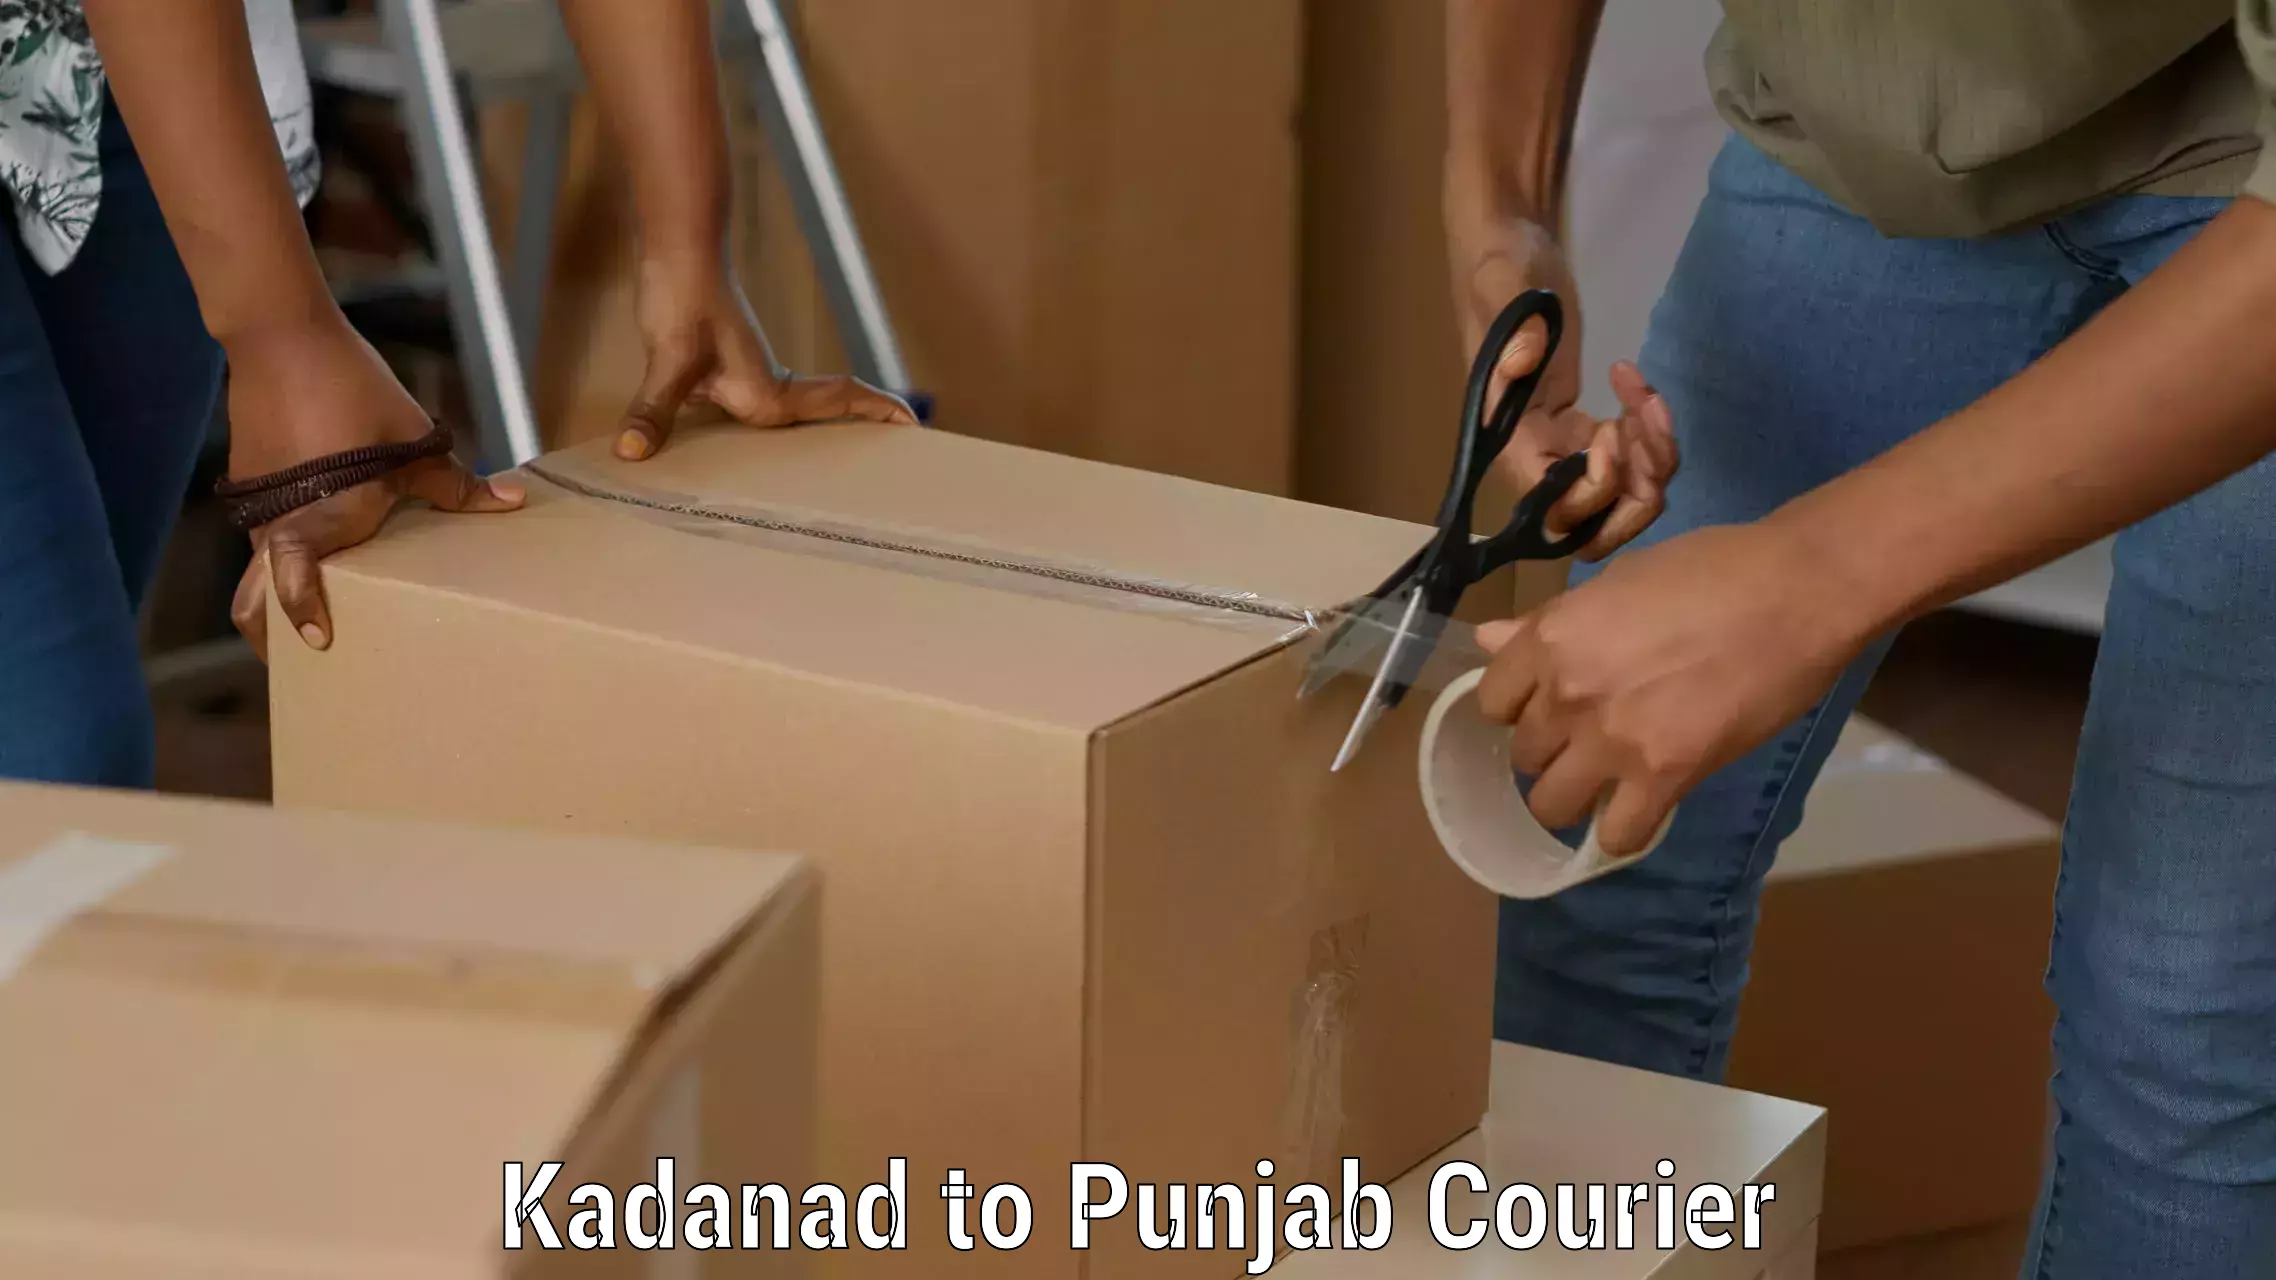 Easy return solutions Kadanad to Punjab